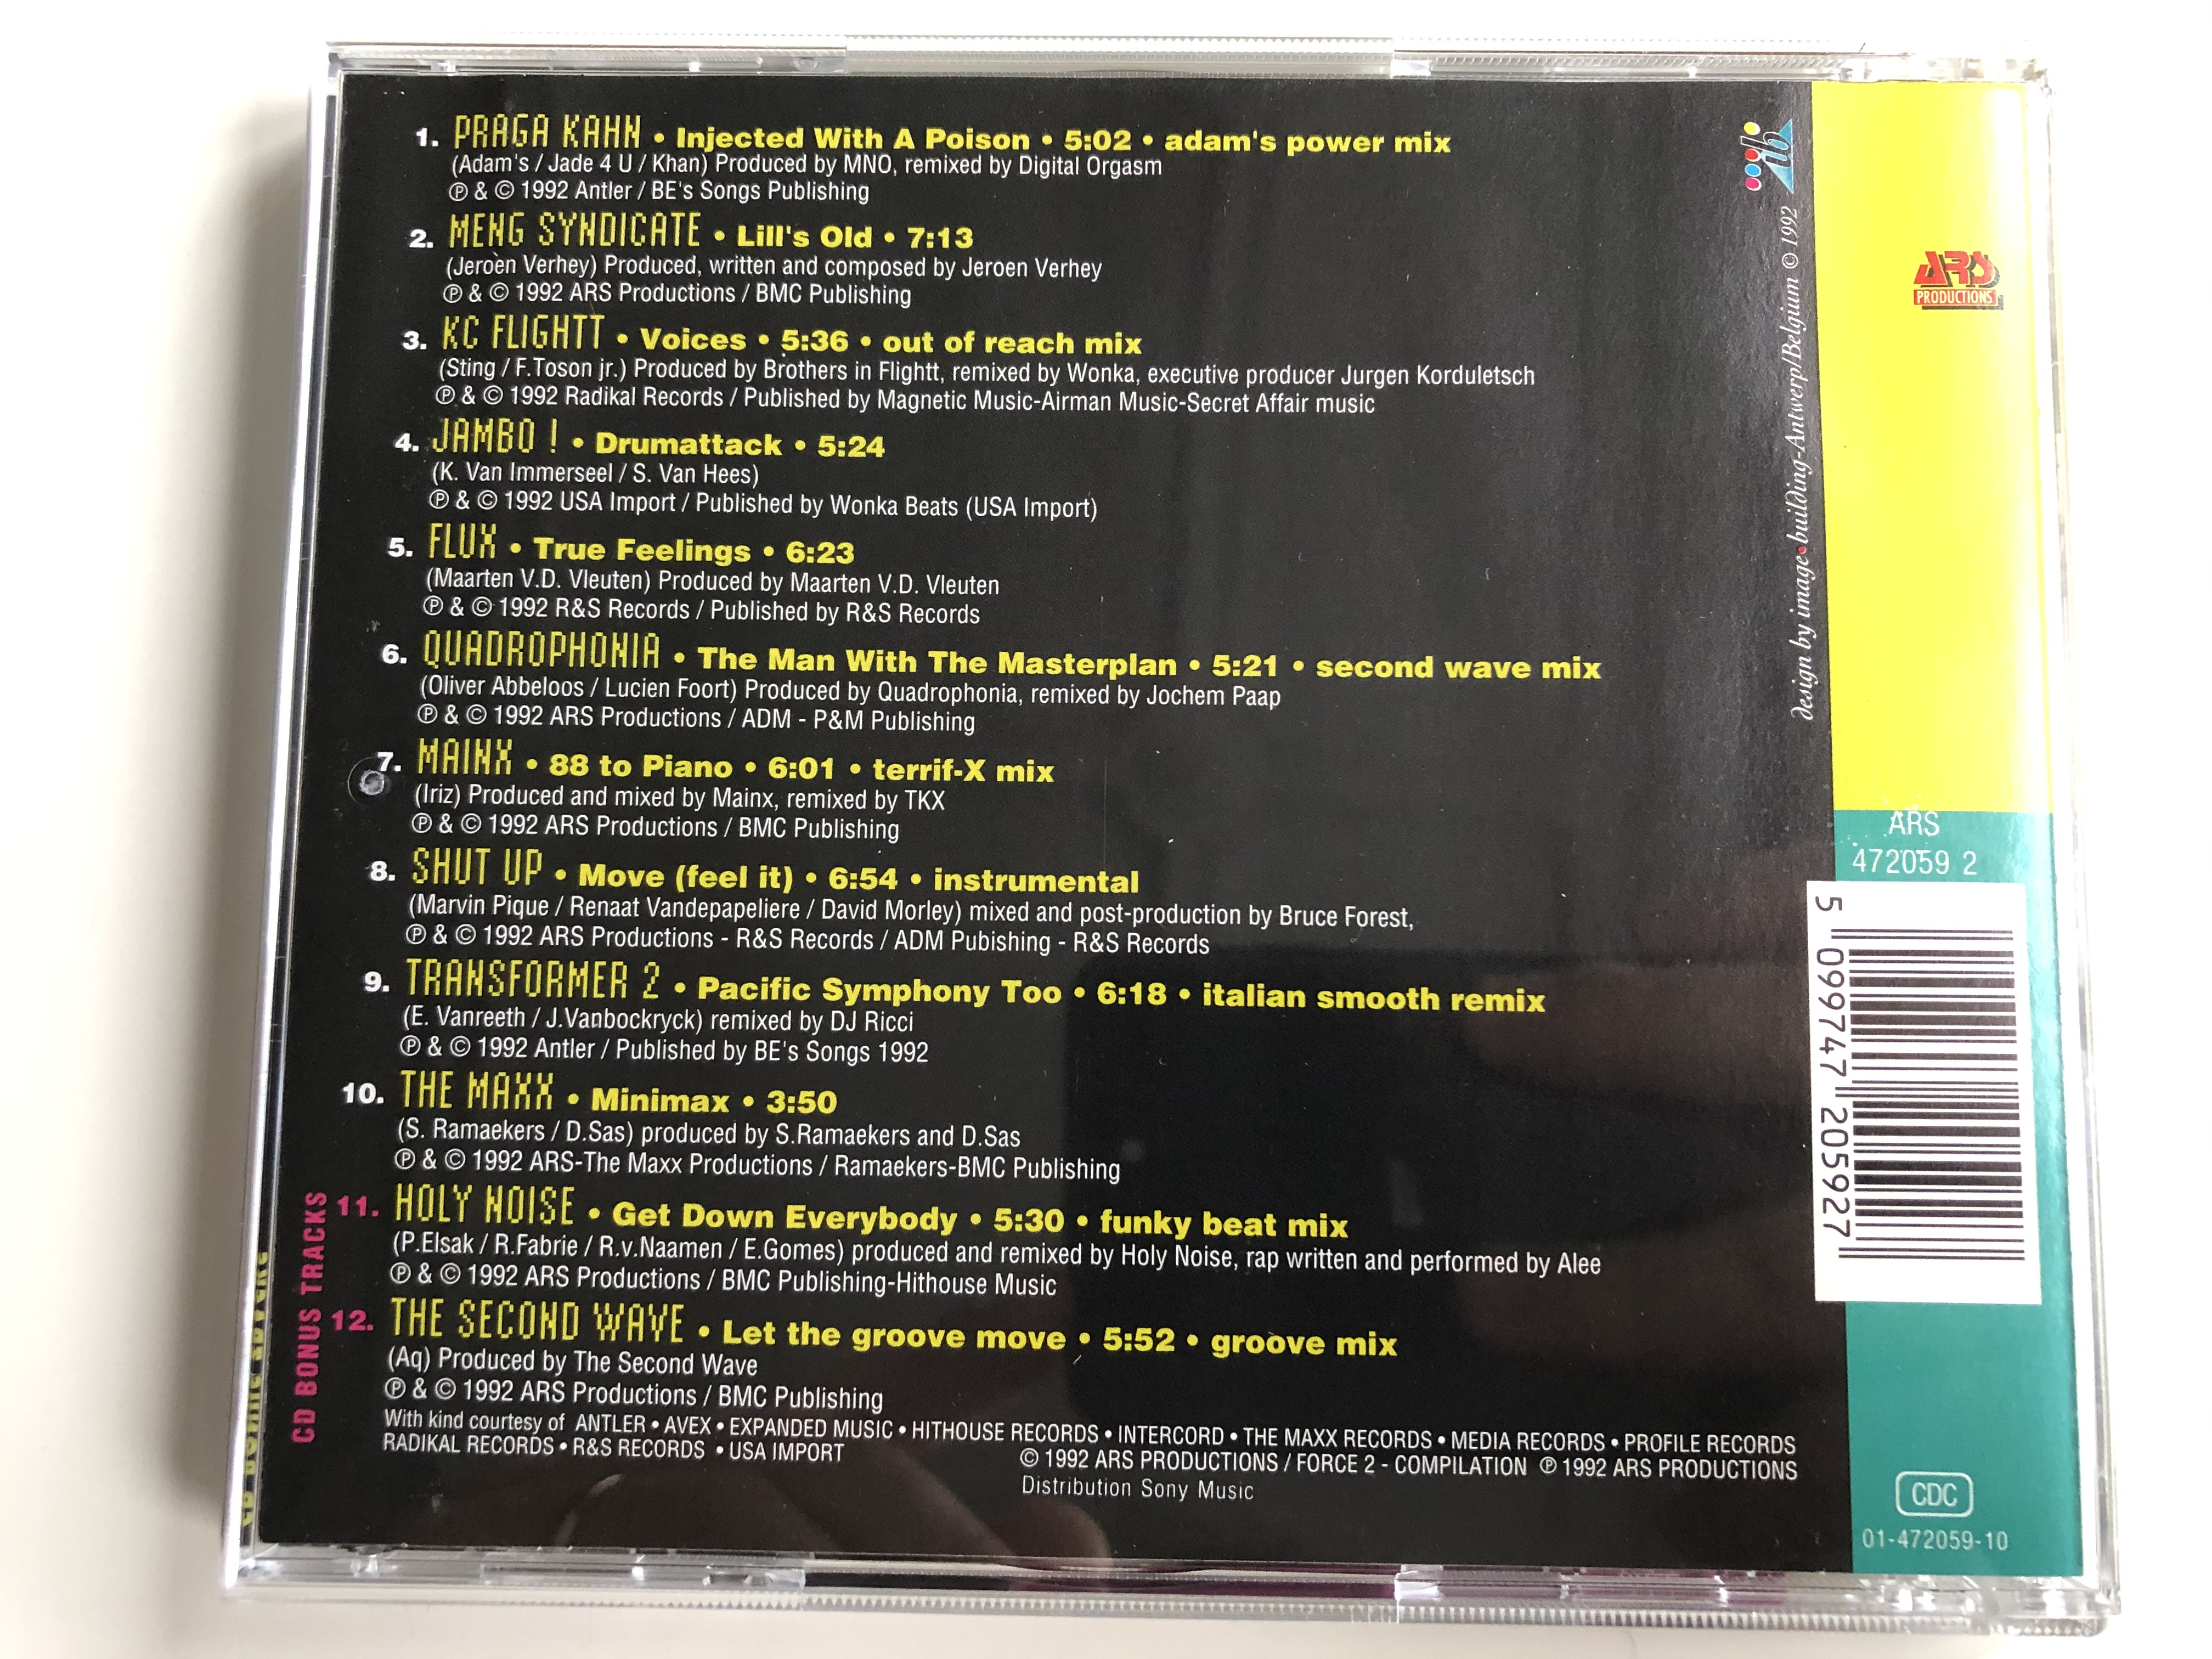 force-2-praga-khan-kc-flightt-quadrophonia-mainx-many-others-exclusive-12-mixes-ars-productions-audio-cd-1992-472059-2-4-.jpg